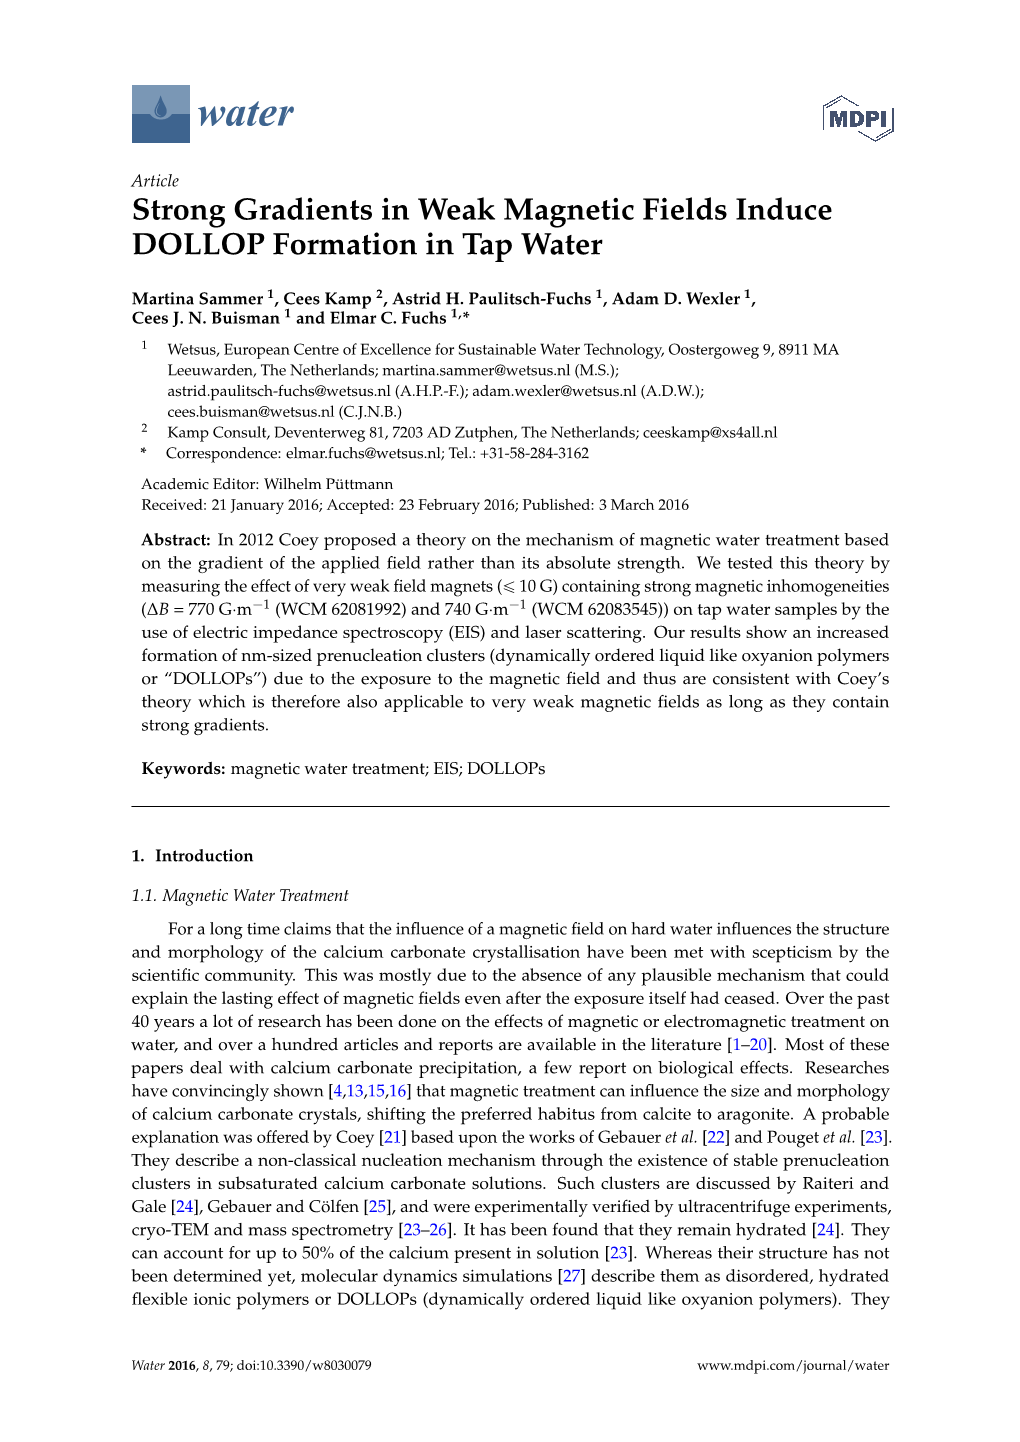 Strong Gradients in Weak Magnetic Fields Induce DOLLOP Formation in Tap Water